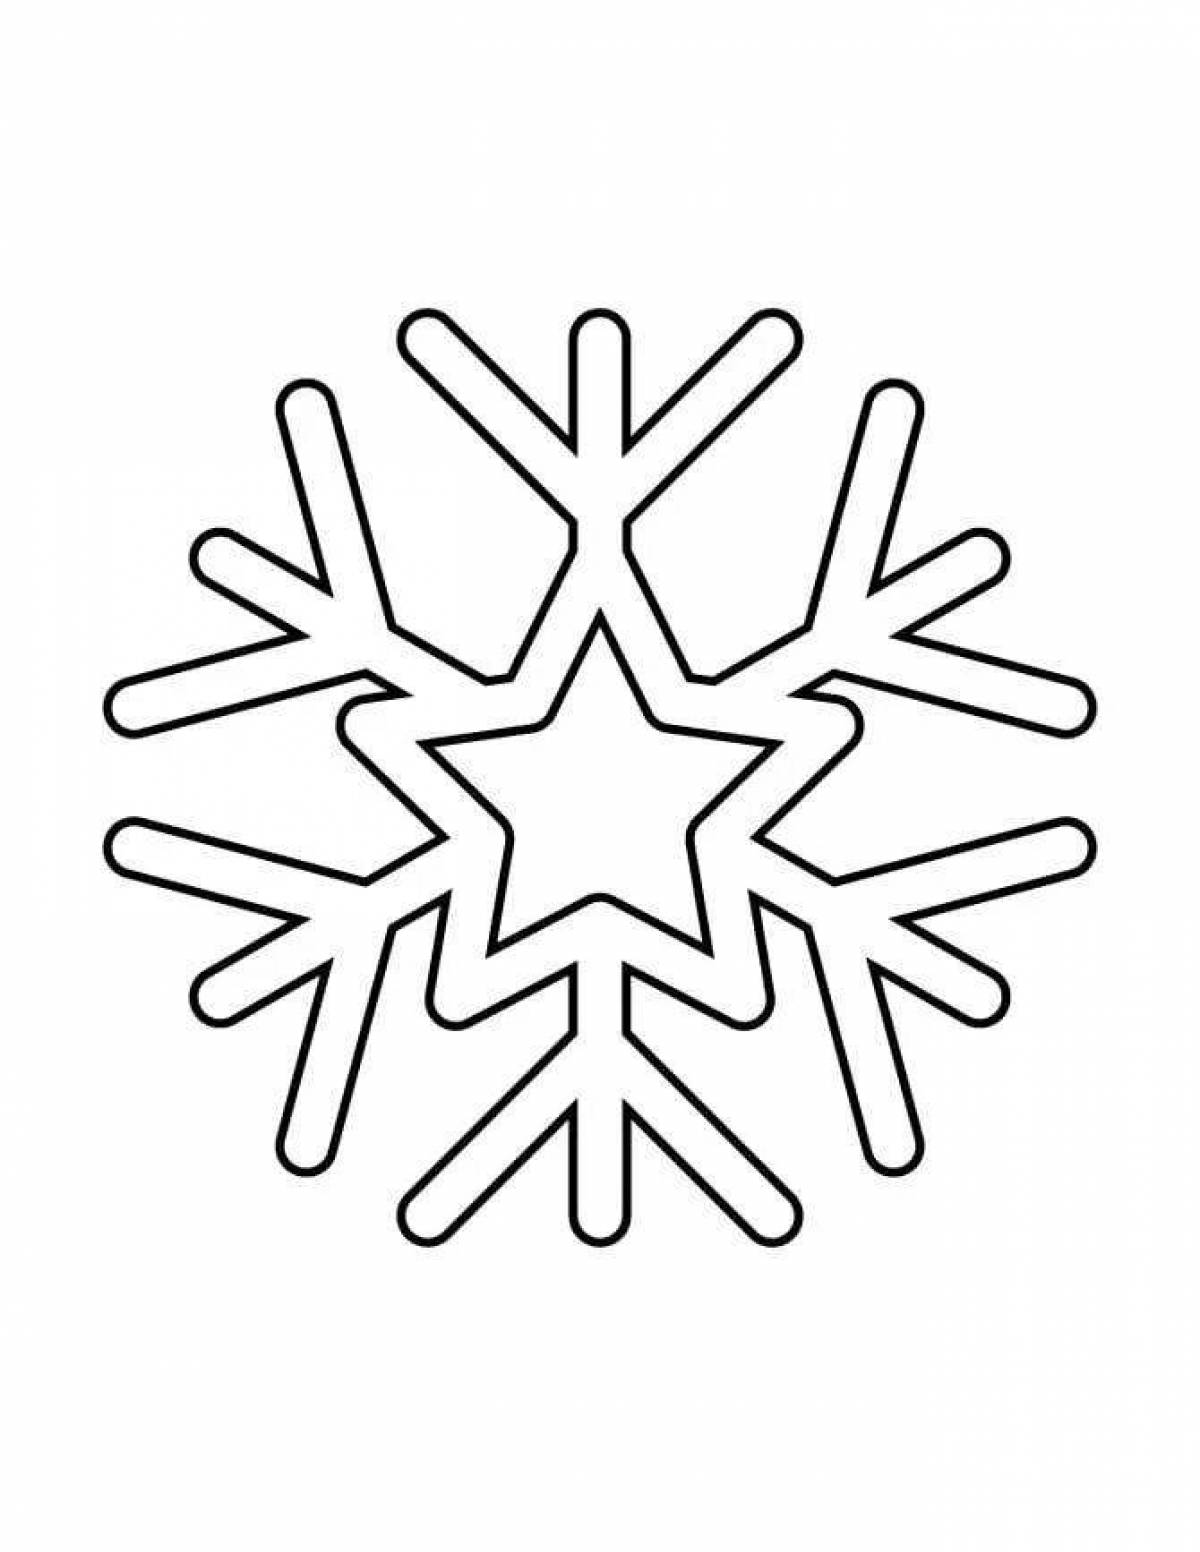 Coloring poetic snowflake